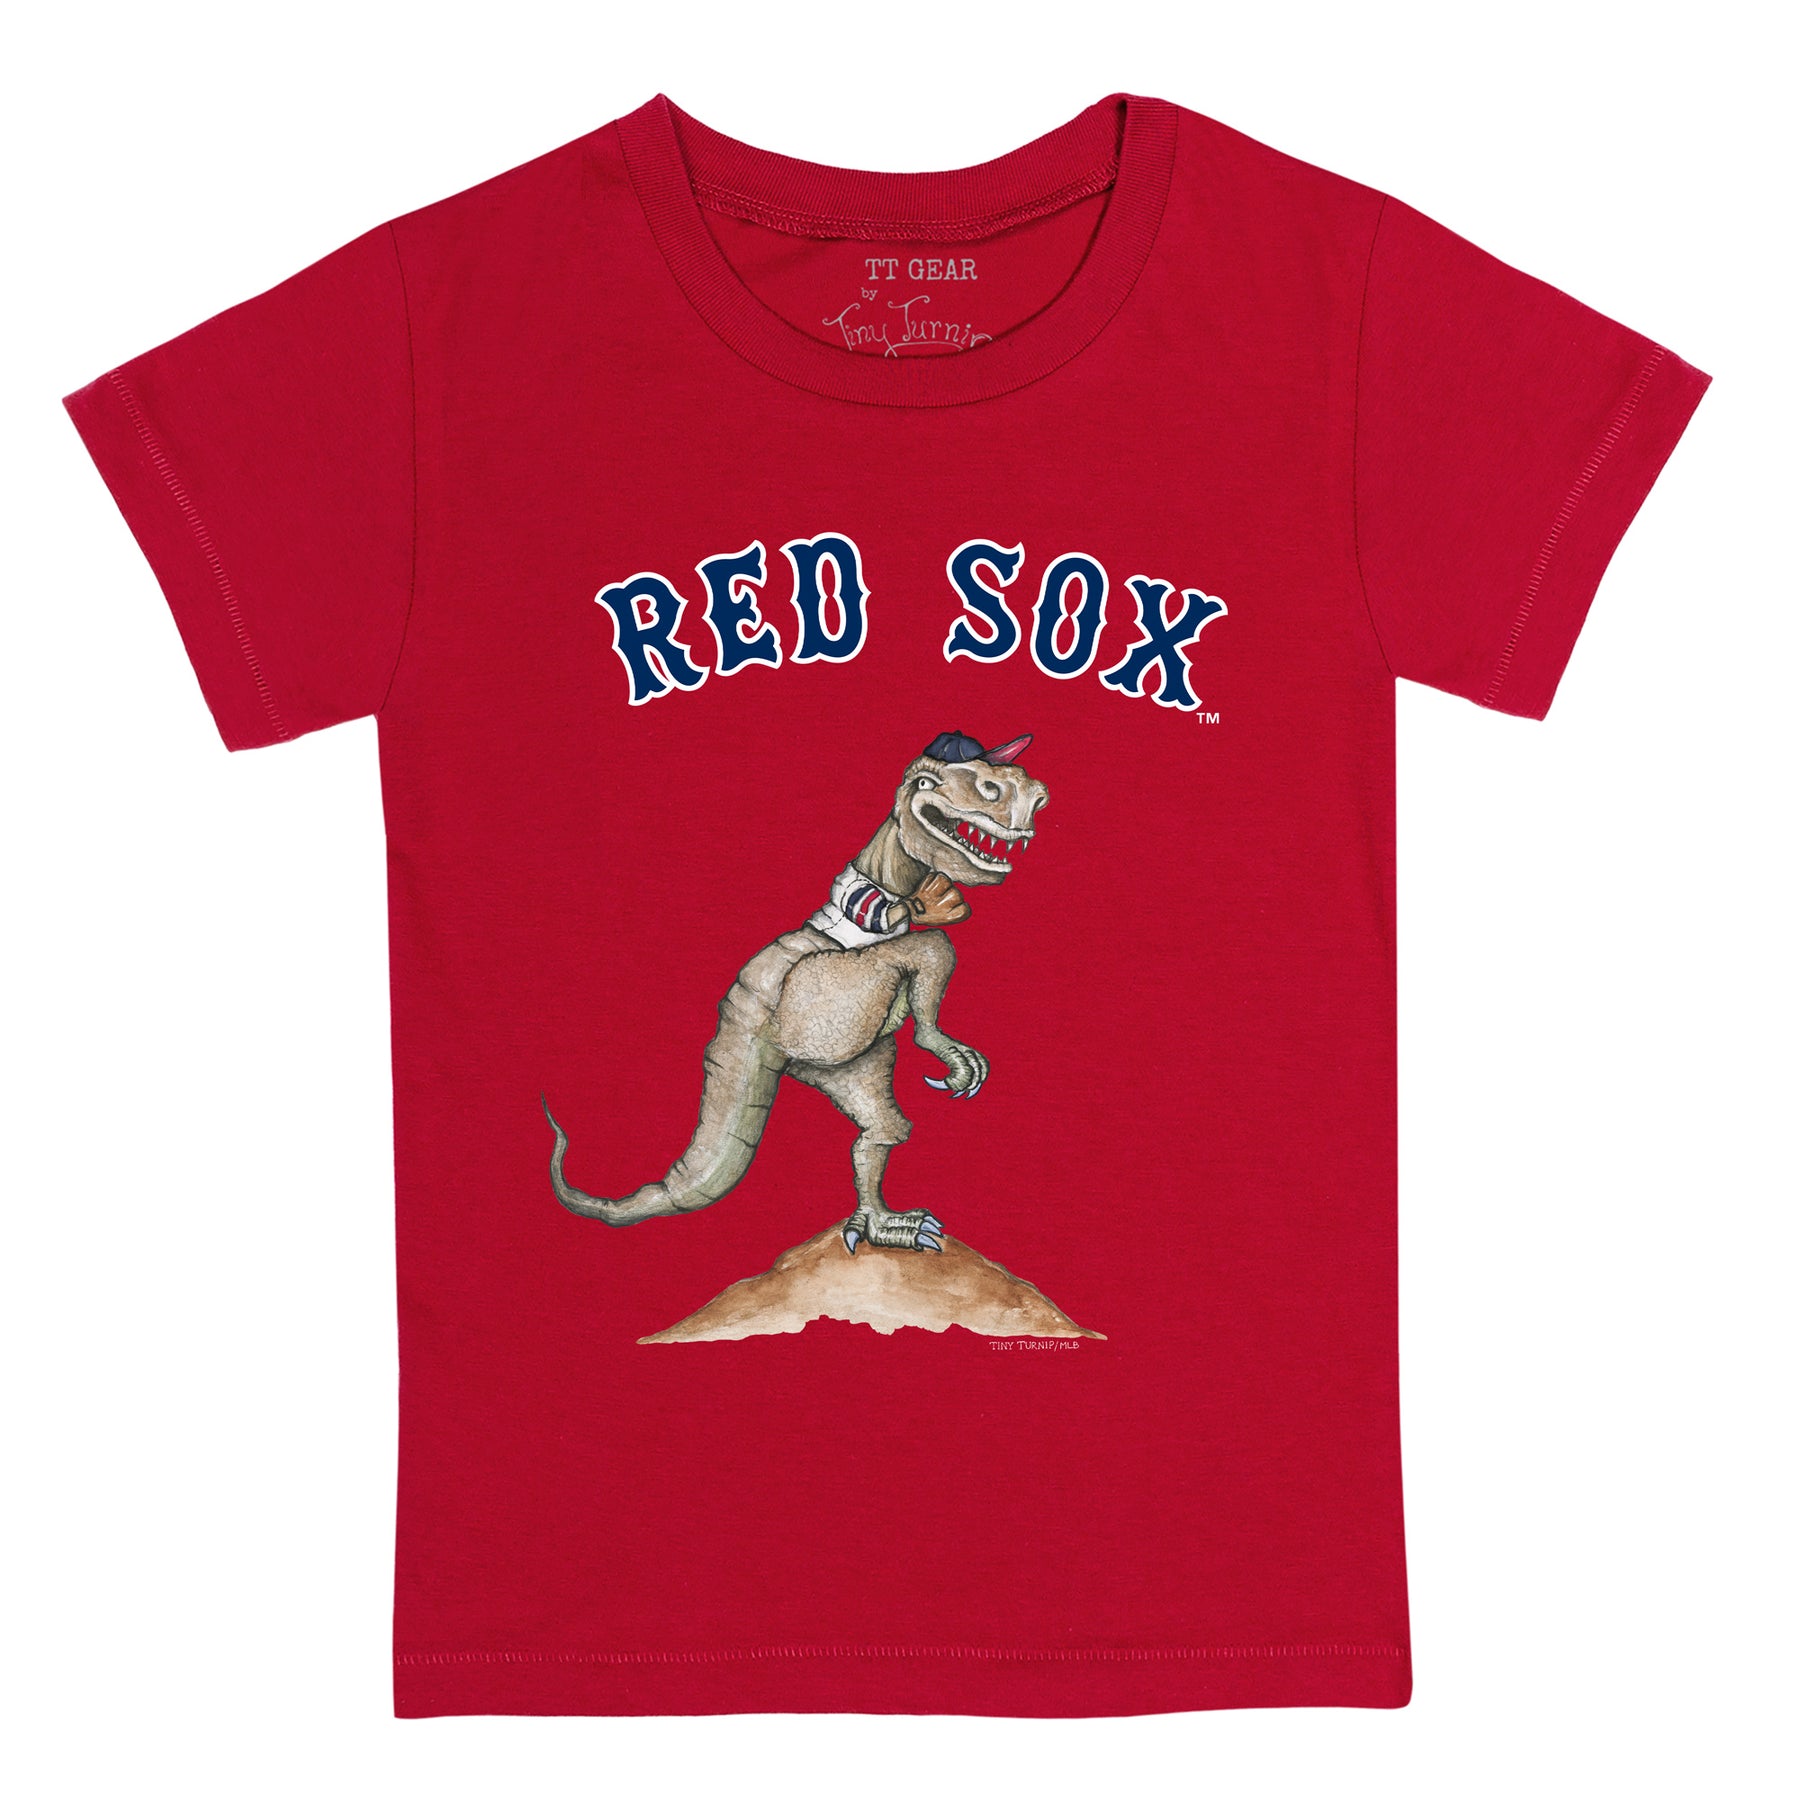 Infant Tiny Turnip White Boston Red Sox Stitched Baseball T-Shirt 